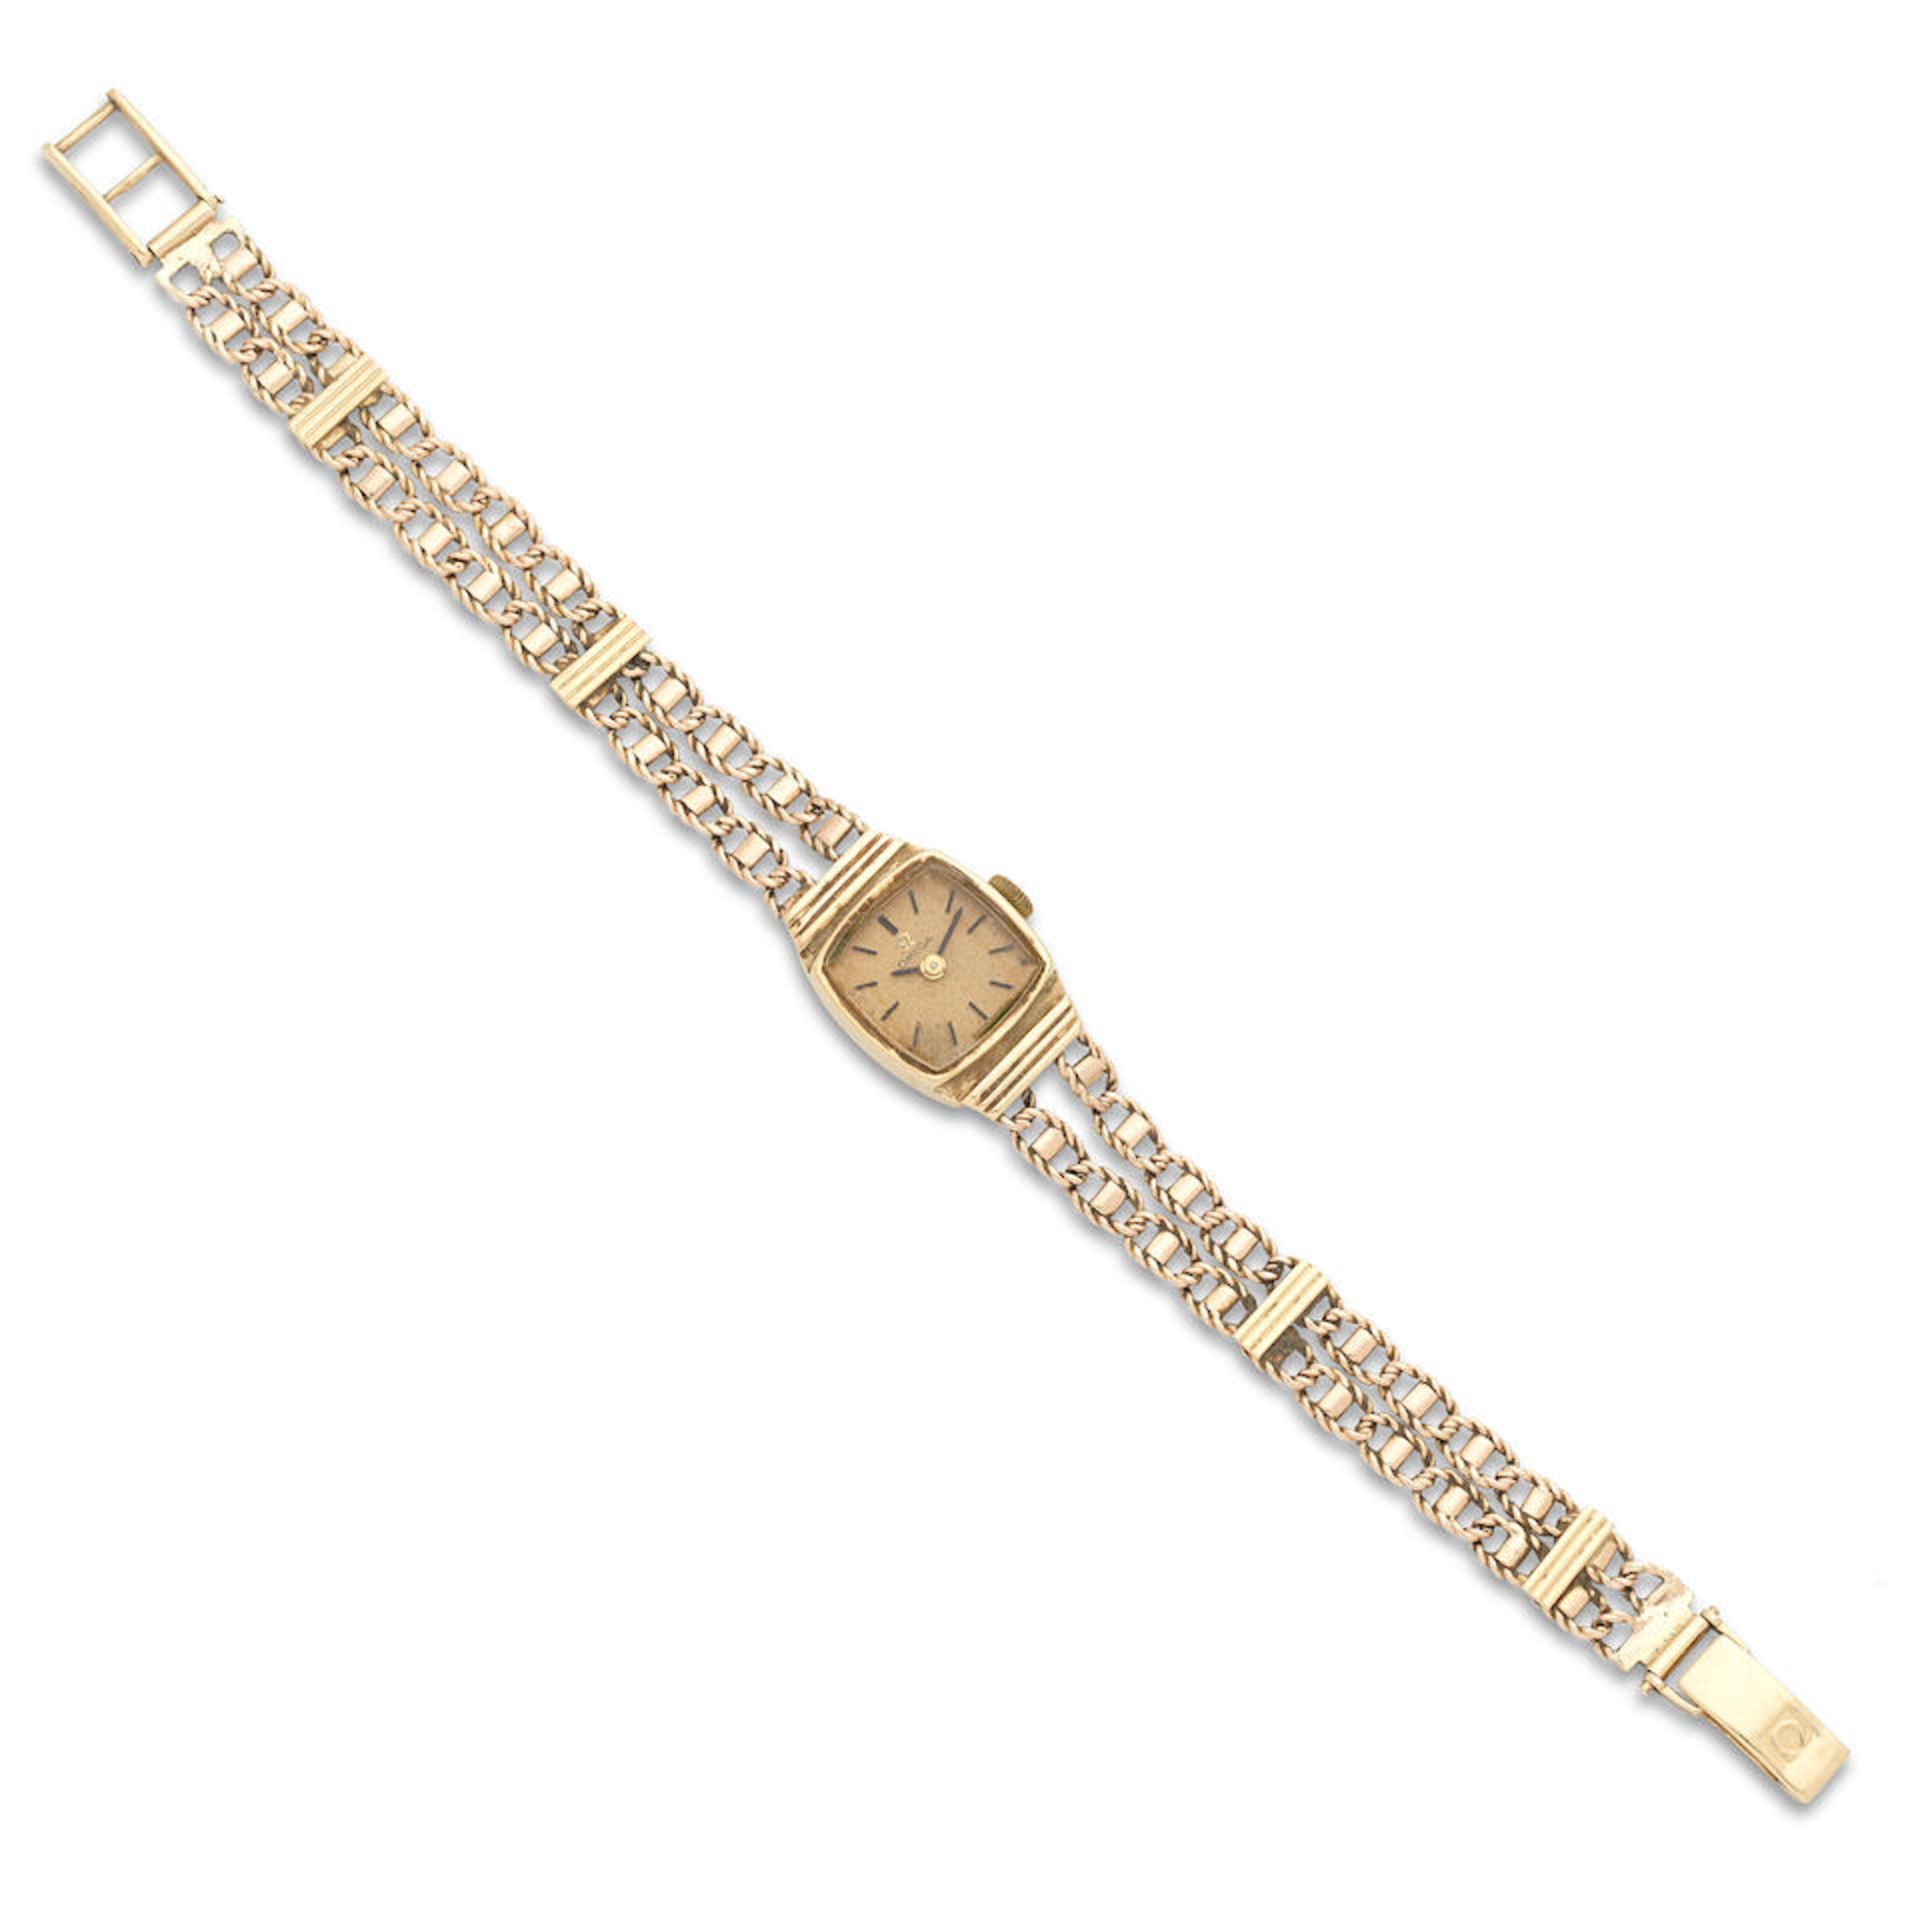 Omega. A lady's 9K gold manual wind bracelet watch Birmingham Hallmark for 1973 - Image 5 of 5